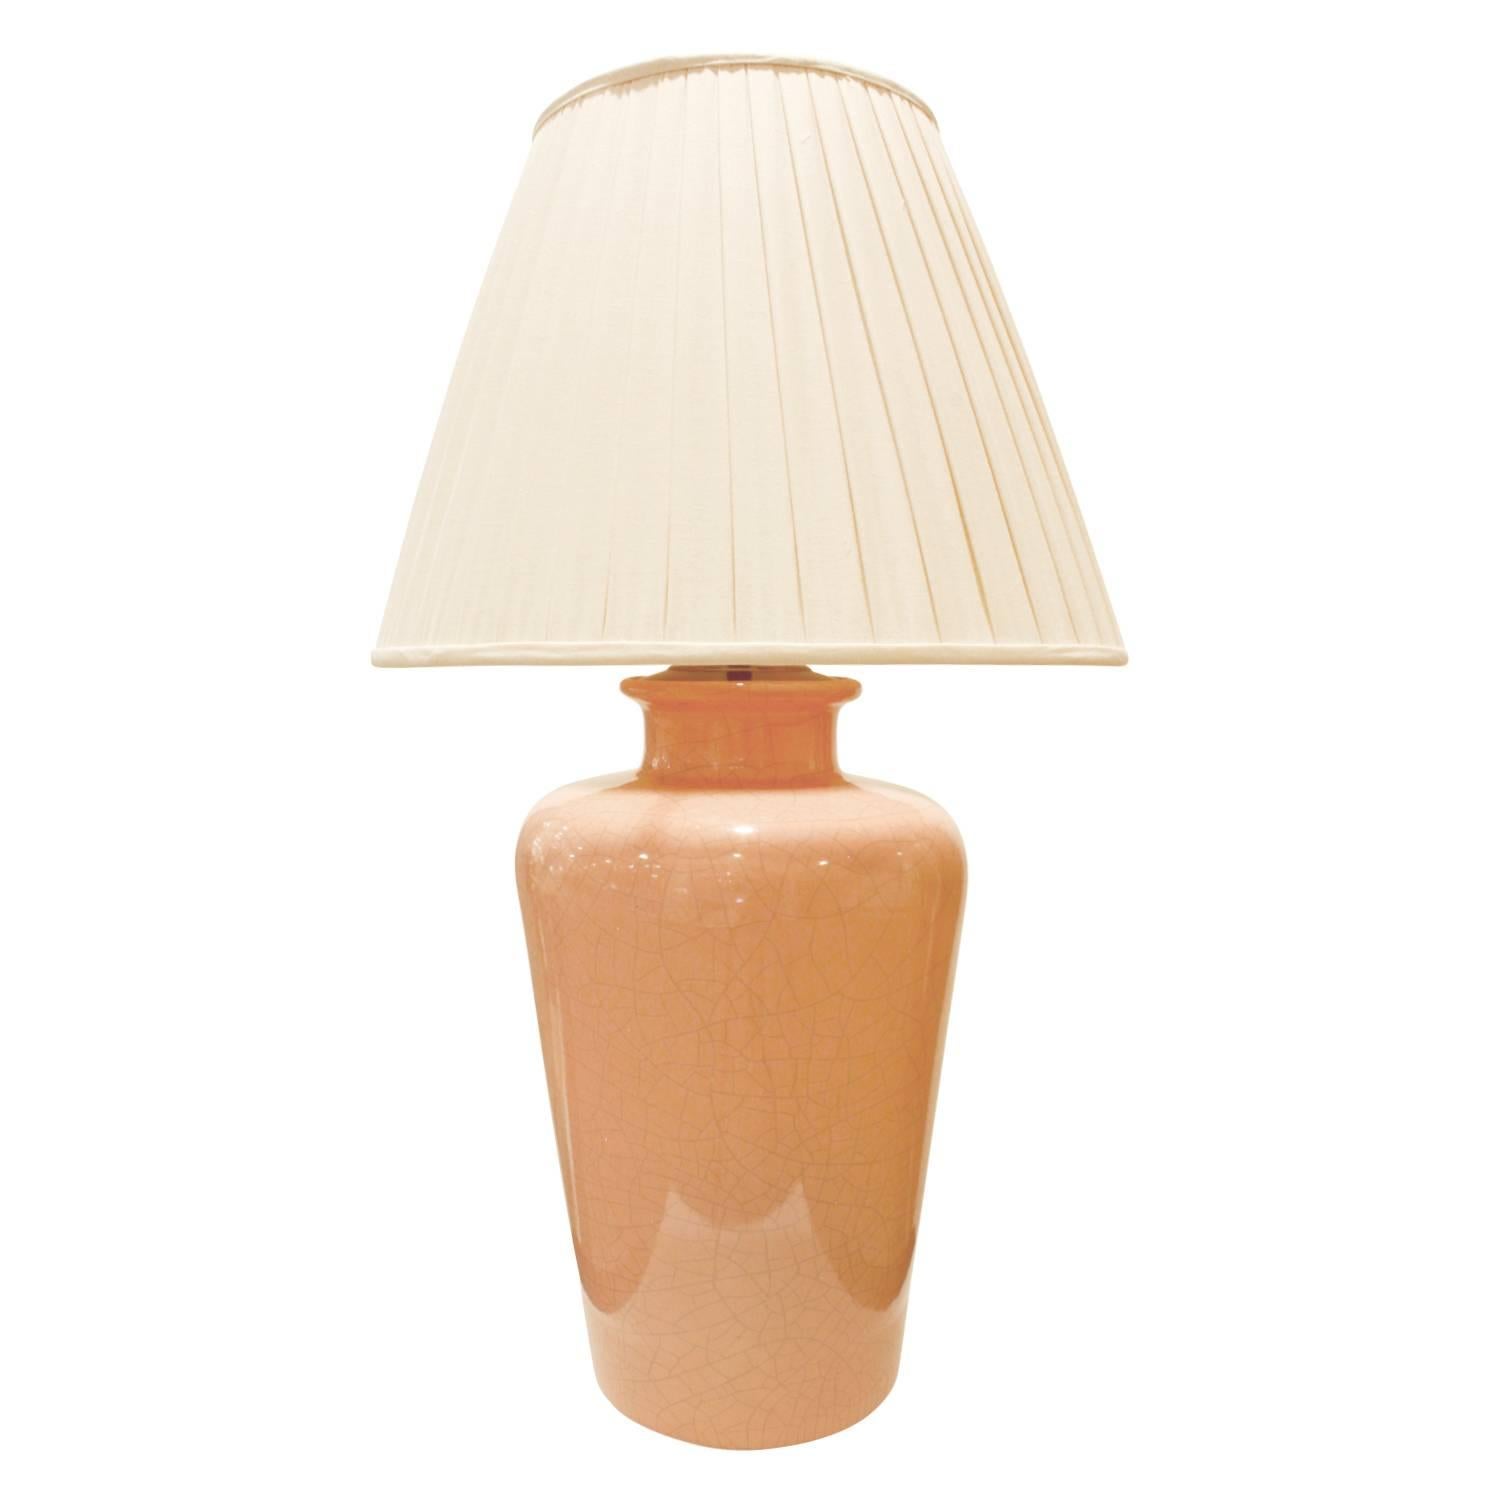 Large Salmon Color Porcelain Table Lamp, 1940s For Sale